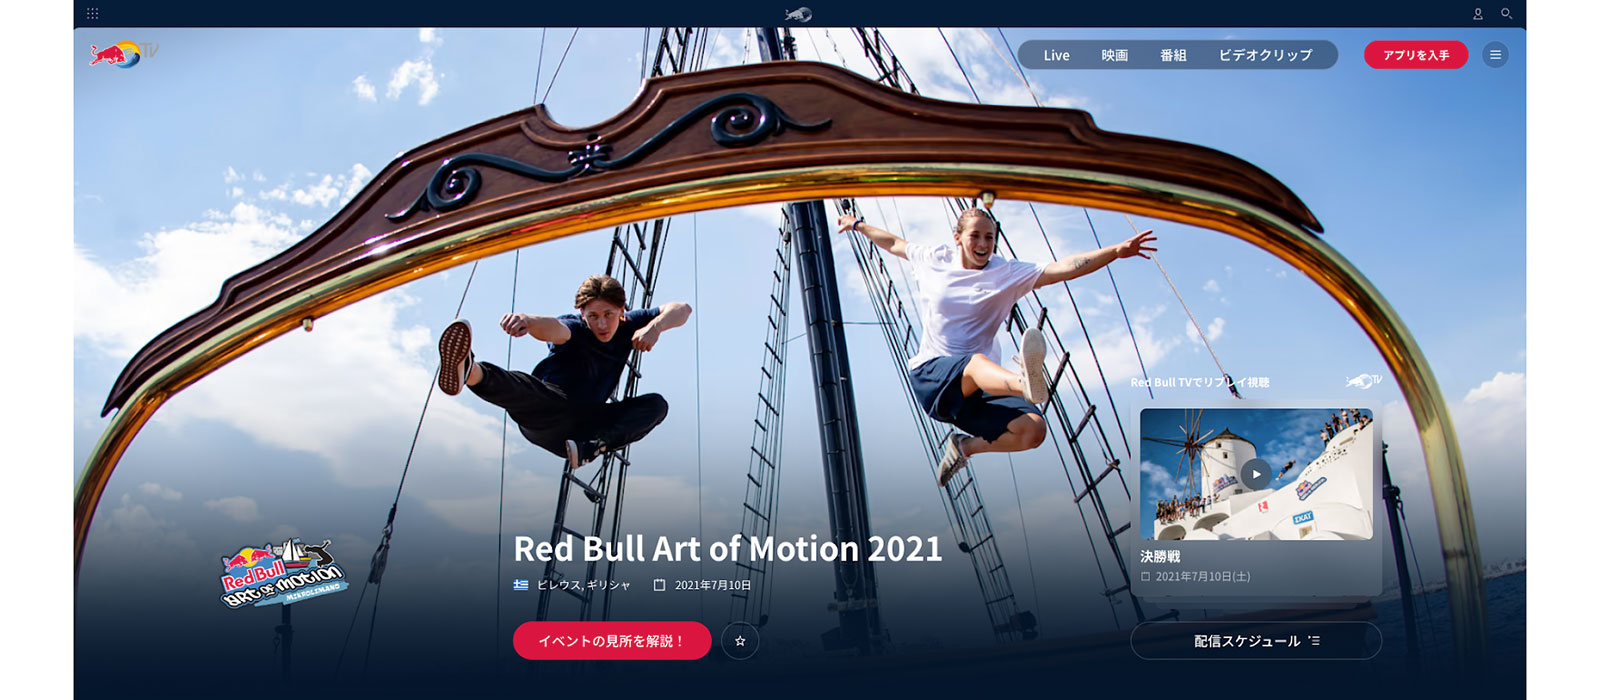 Red Bull Art of Motion公式サイトより。